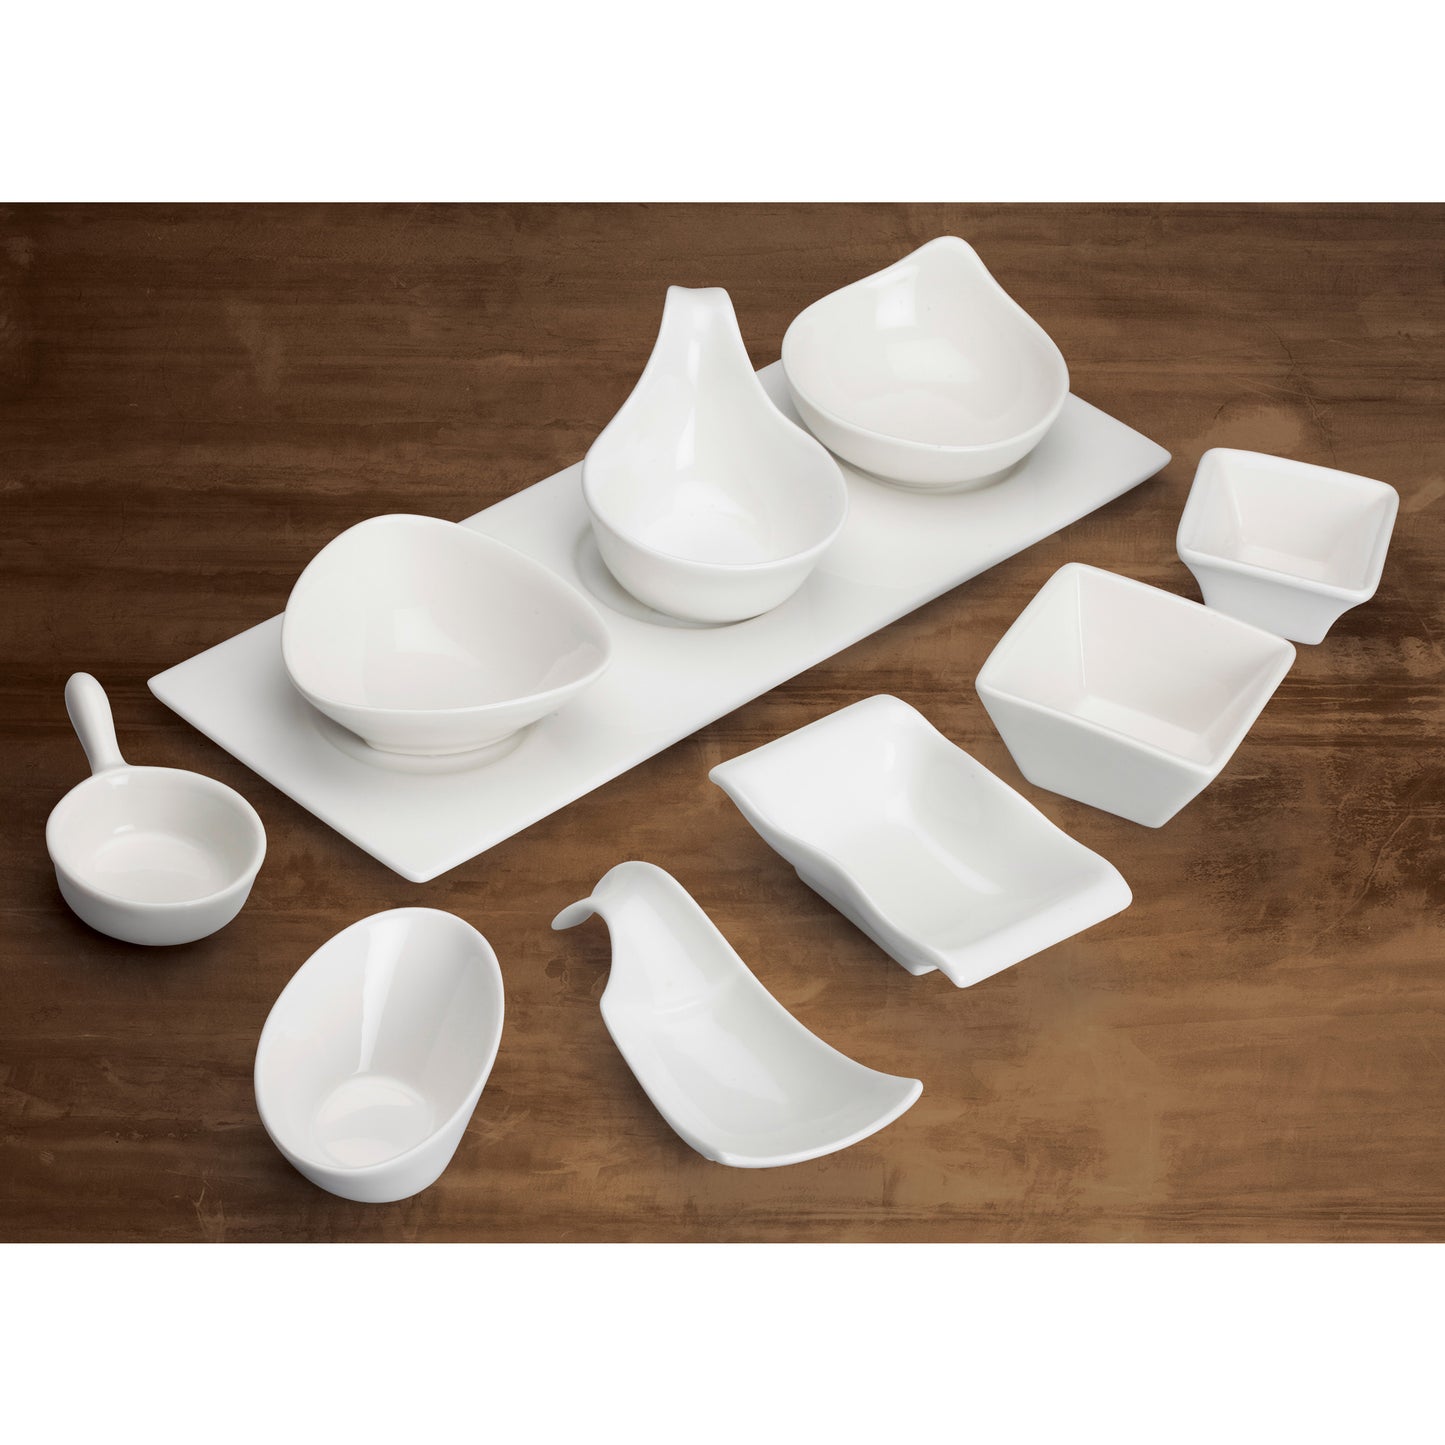 WDP021-106 - 4-1/2"L x 2-7/8"W Porcelain Dish, Bright White, 36 pcs/case